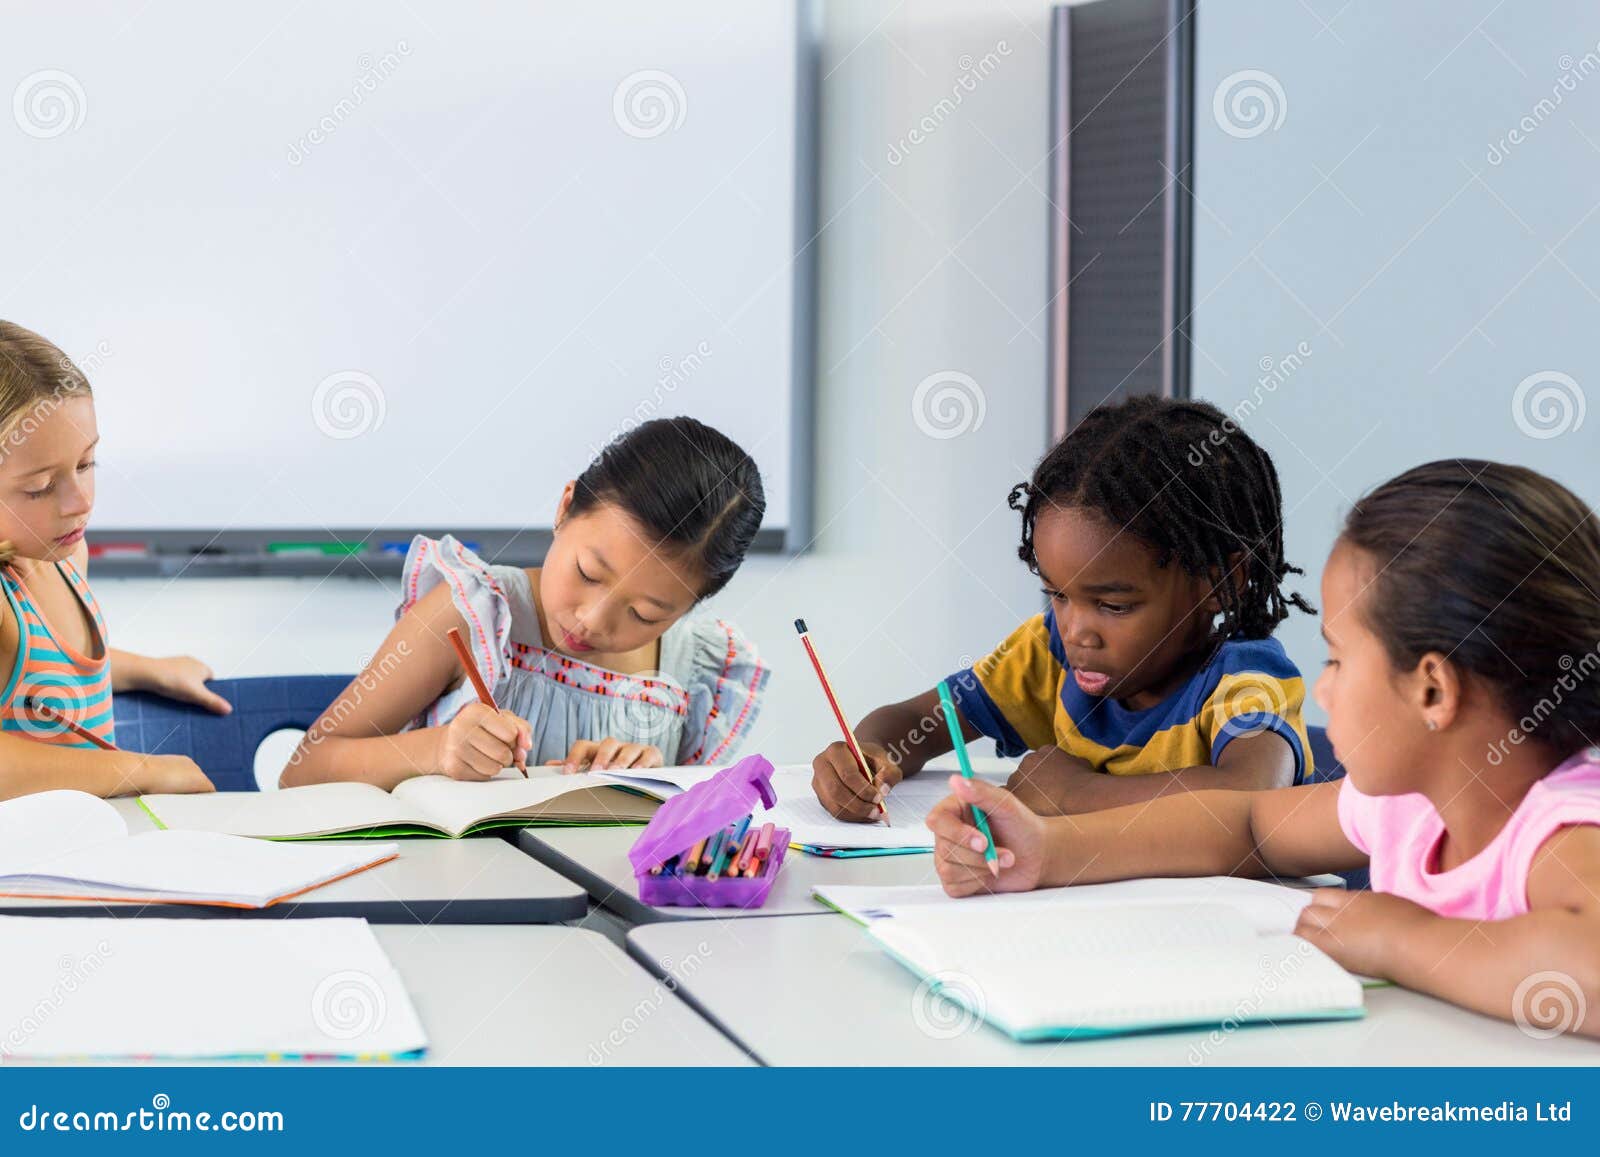 schoolchildren writing on books